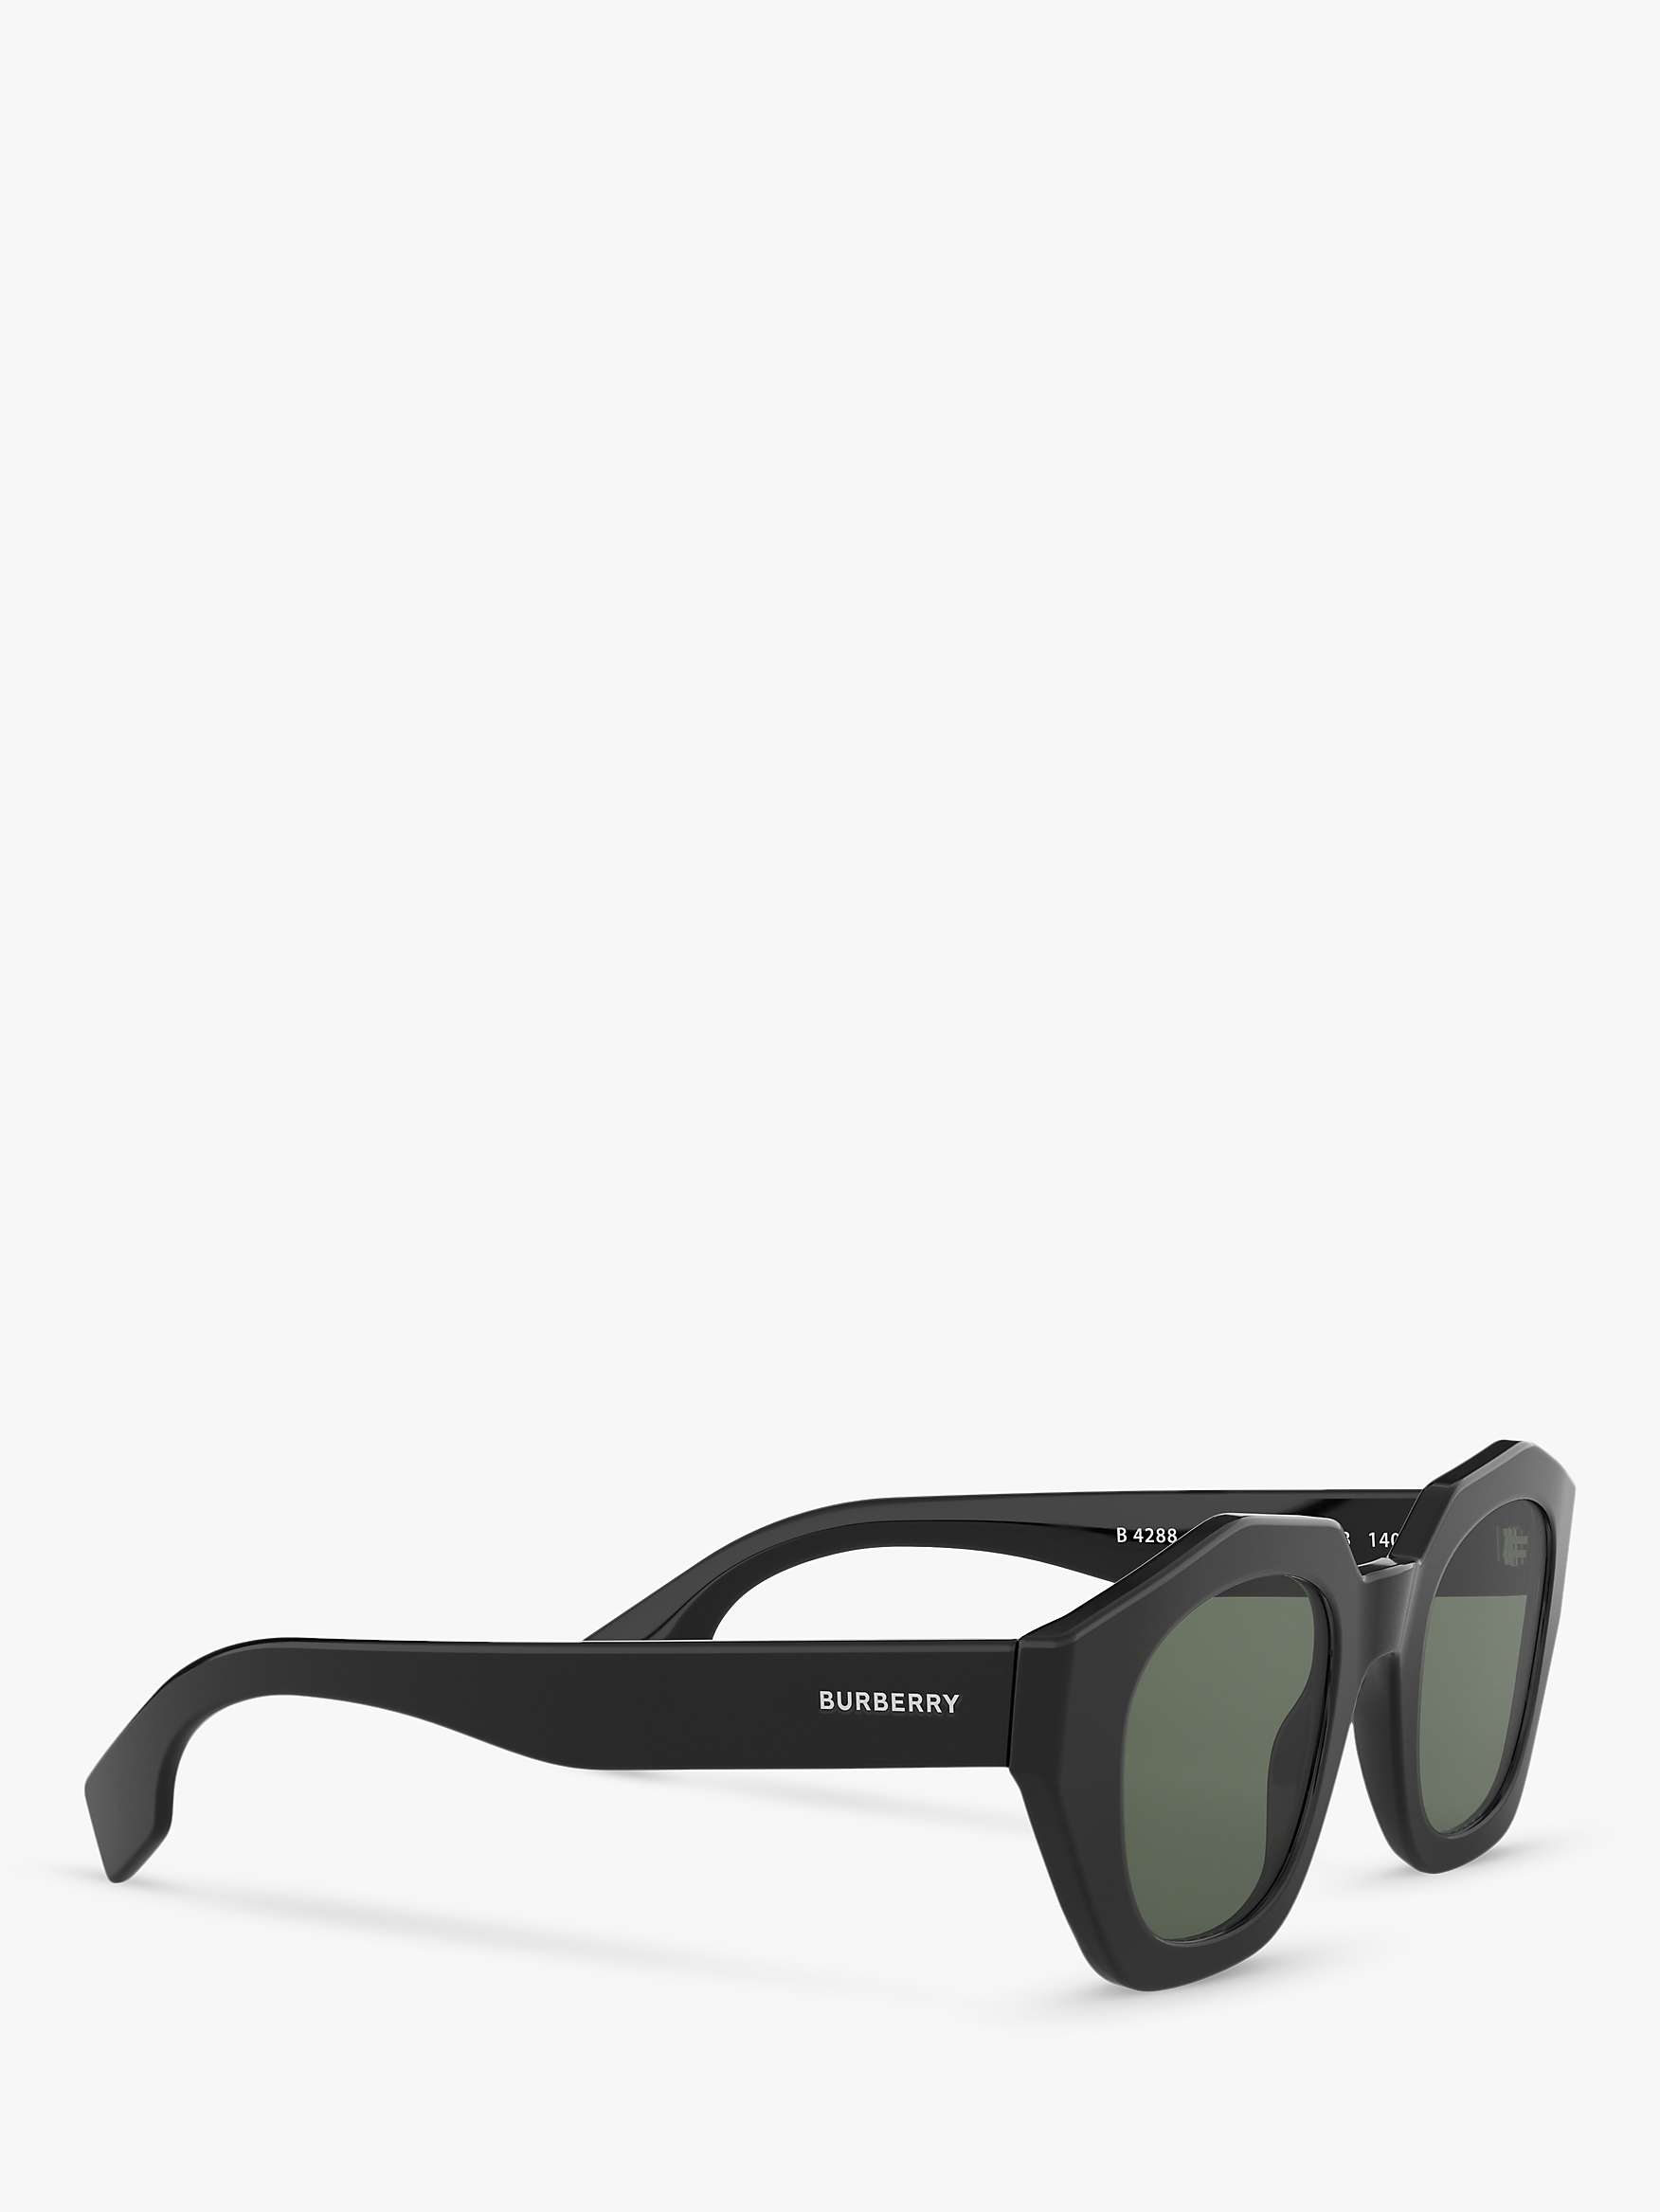 Buy Burberry BE4288 Women's Irregular Sunglasses, Black/Green Online at johnlewis.com